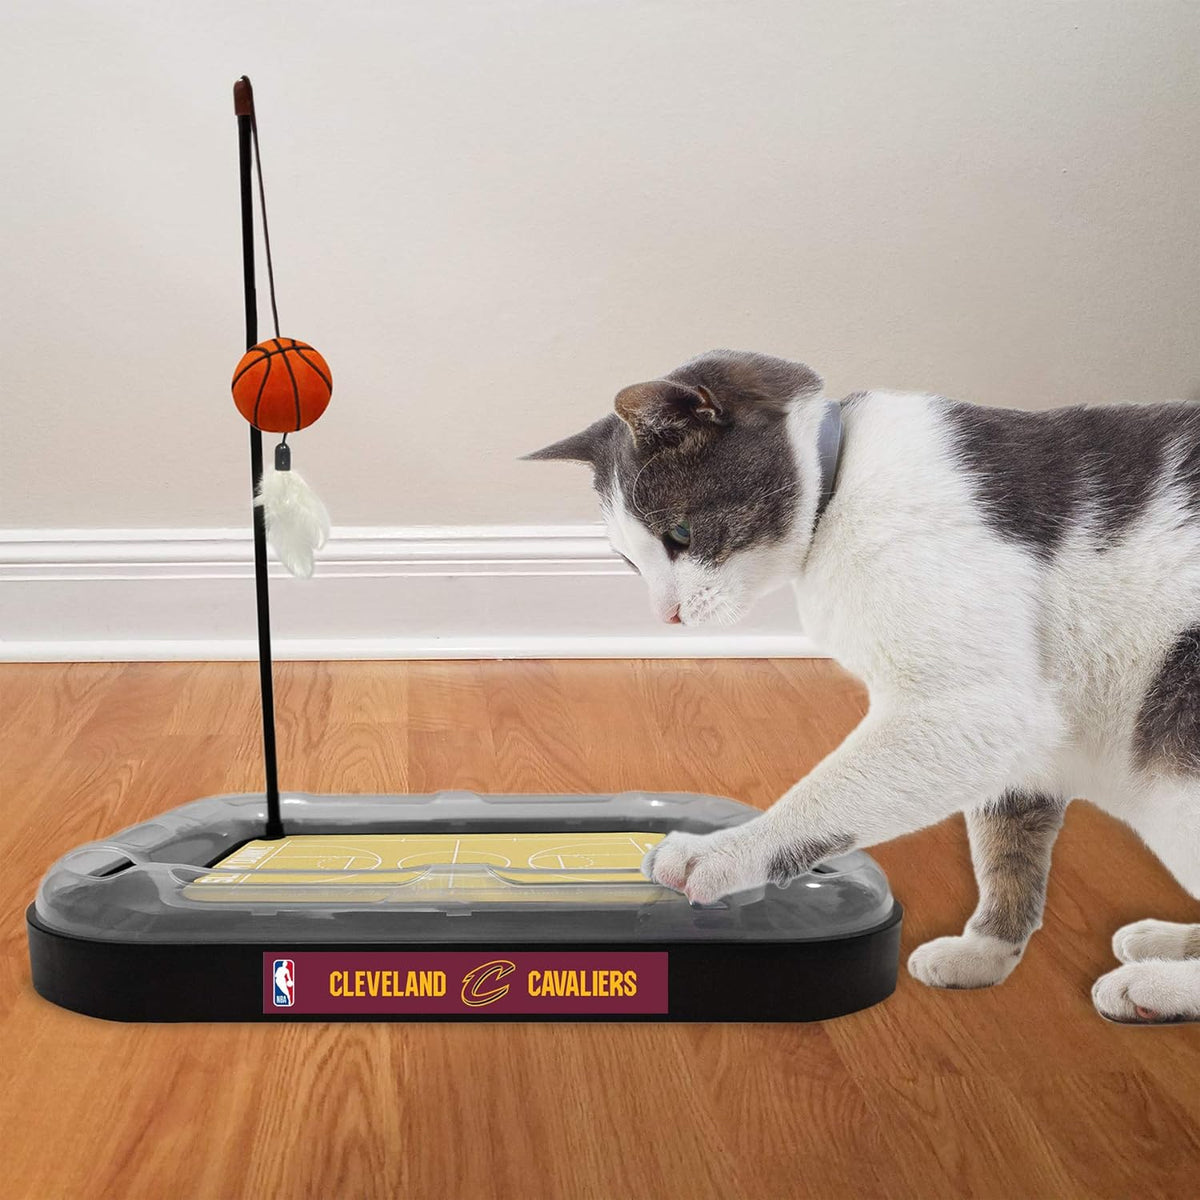 Cleveland Cavaliers Basketball Cat Scratcher Toy